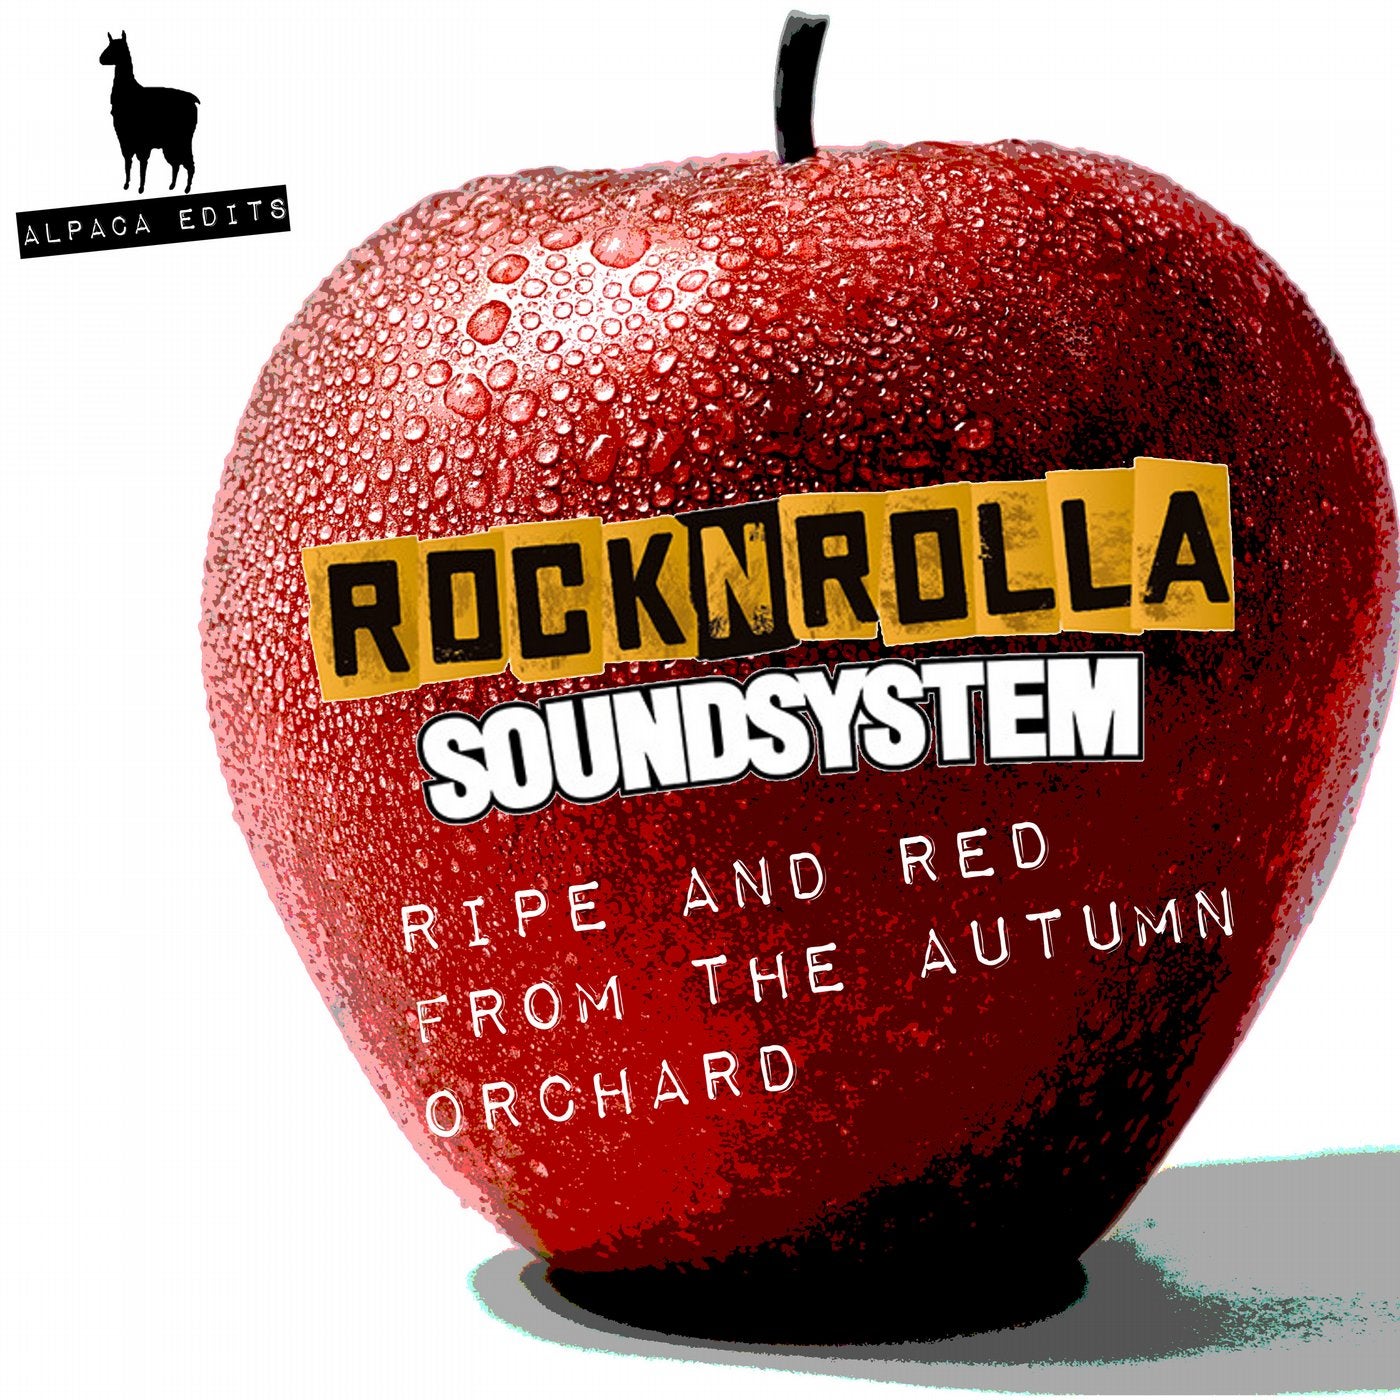 RocknRolla Soundsystem music download - Beatport